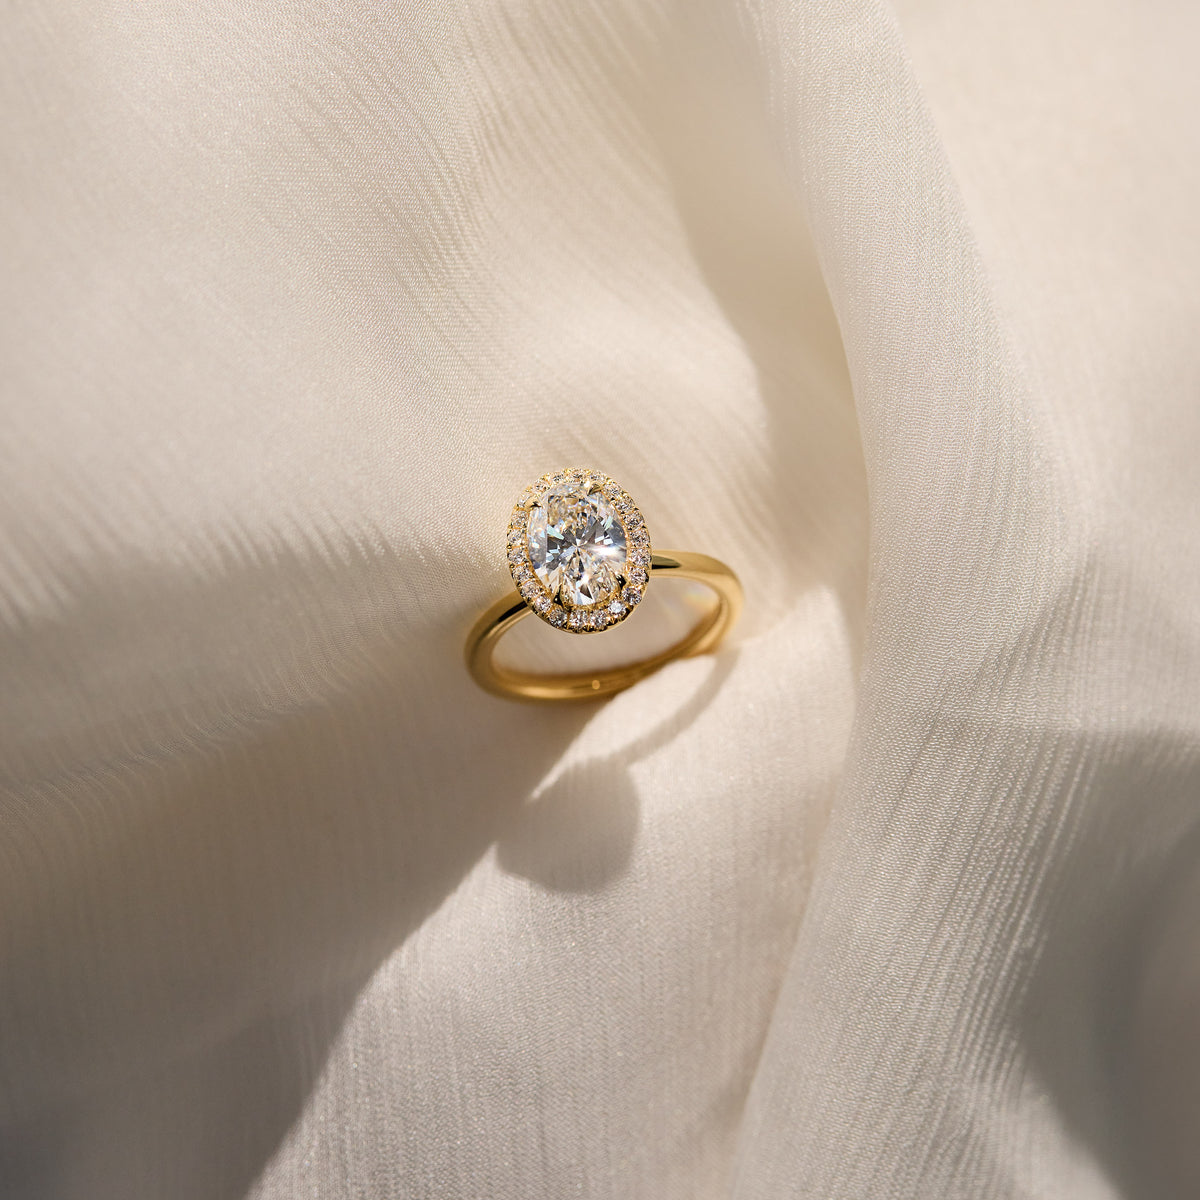 5 Important Elements For A Big Wedding Day - Women Fashion Lifestyle Blog  Shinecoco.com | Cathedral diamond engagement ring, Round diamond engagement  rings, Engagement rings